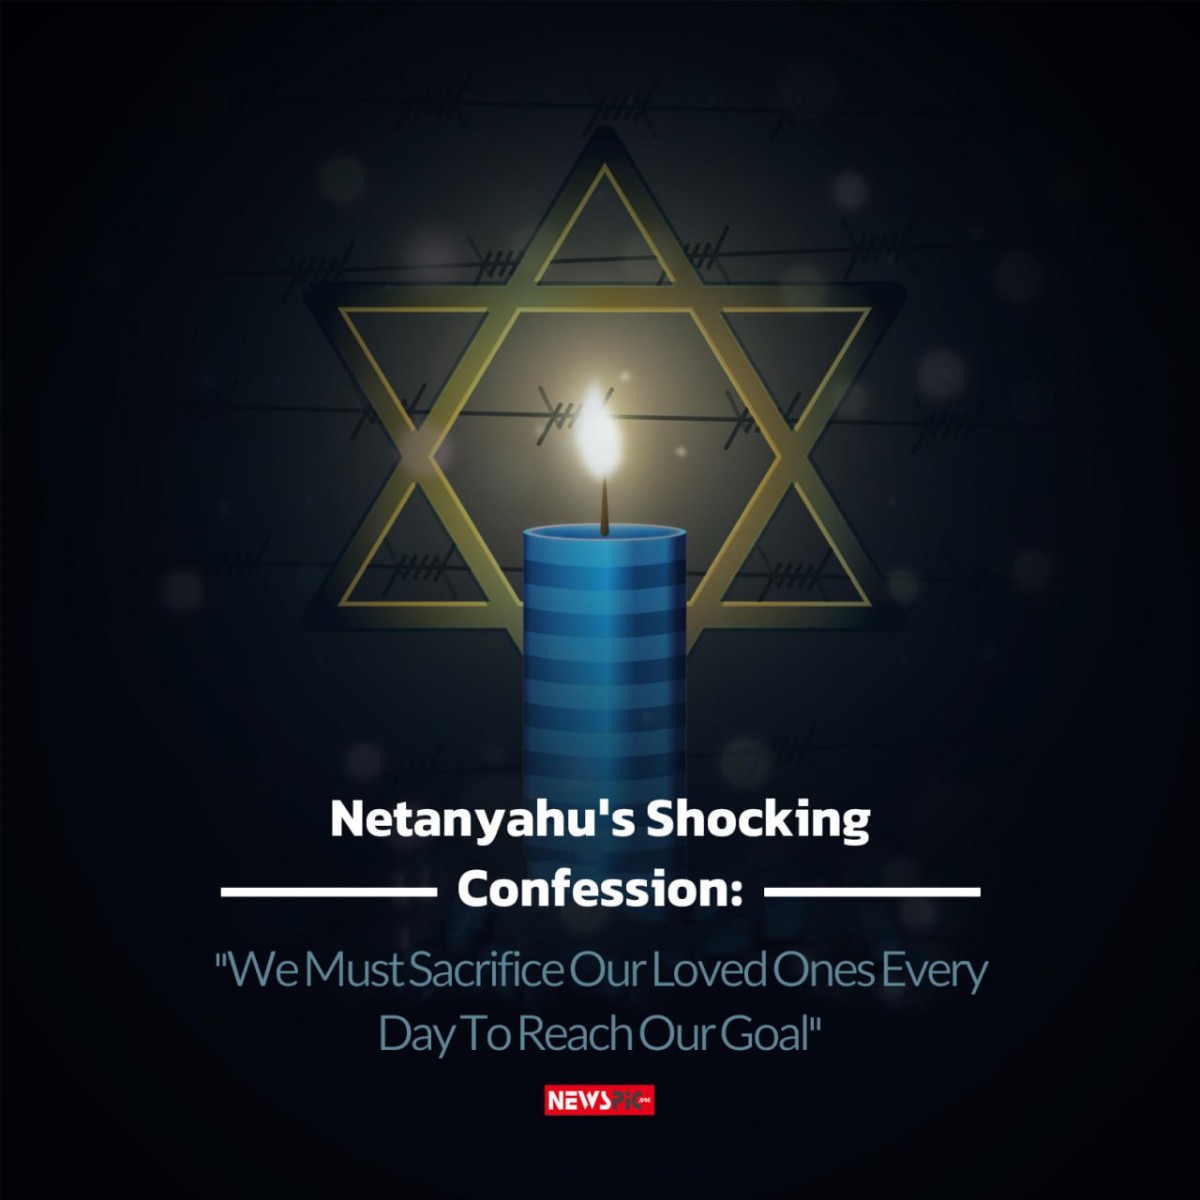 Netanyahu's Shocking Confession